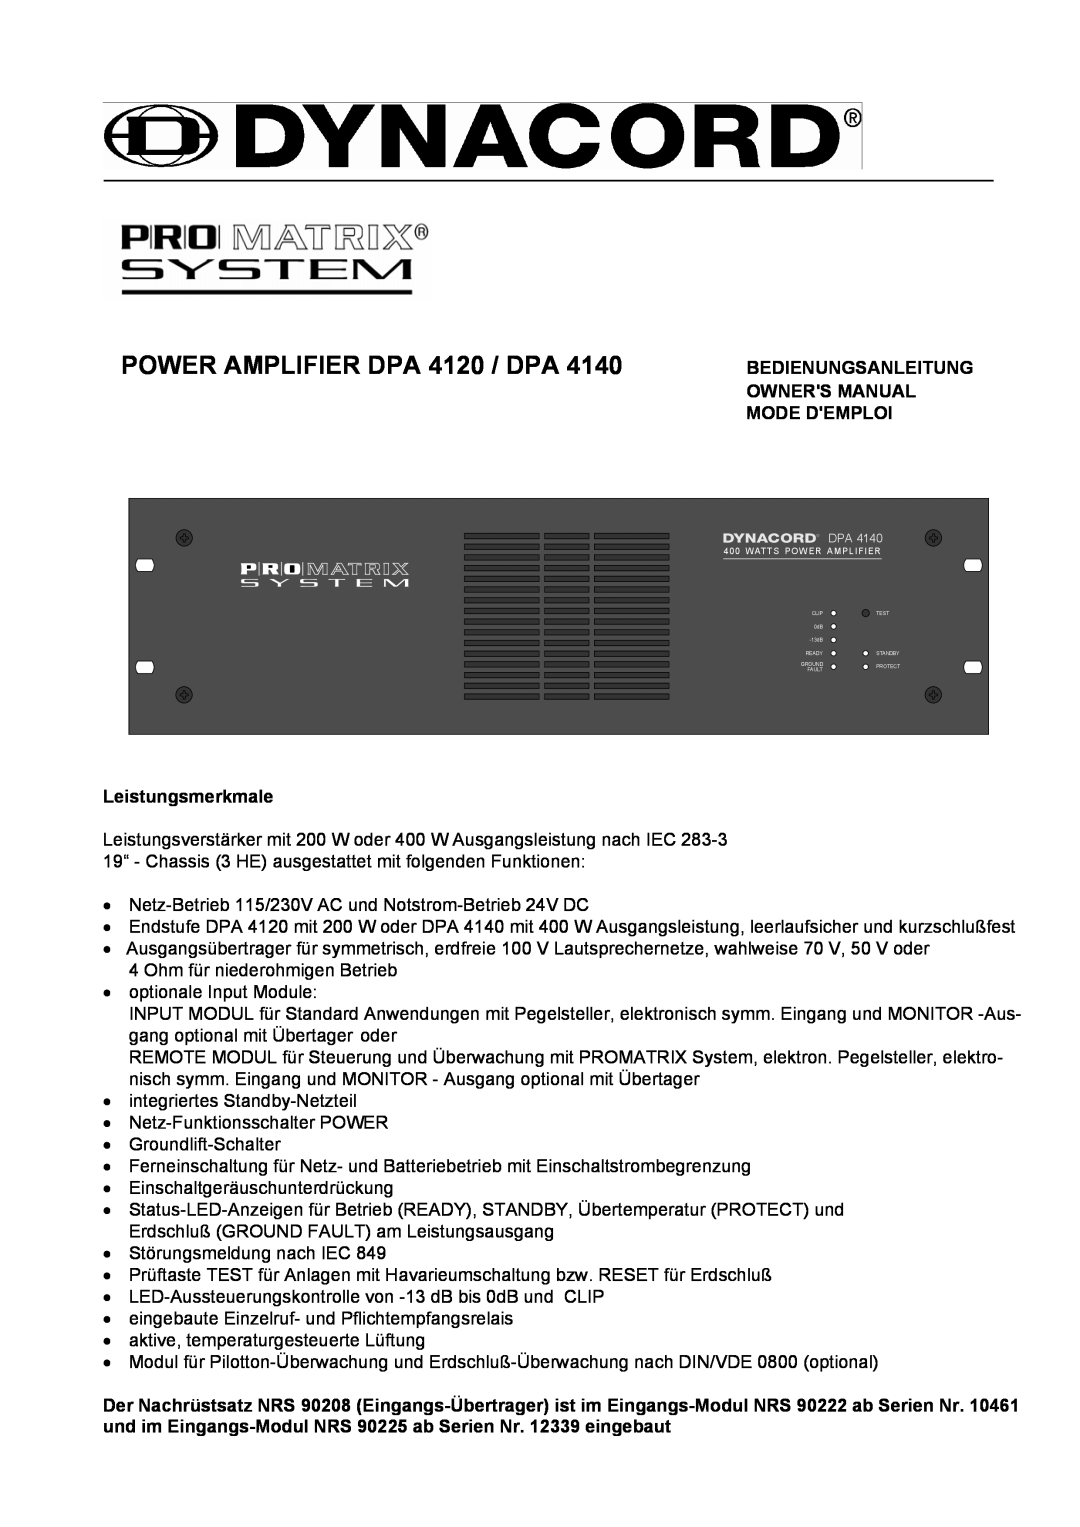 Dynacord DPA 4140 owner manual POWER AMPLIFIER DPA 4120 / DPA, Leistungsmerkmale 